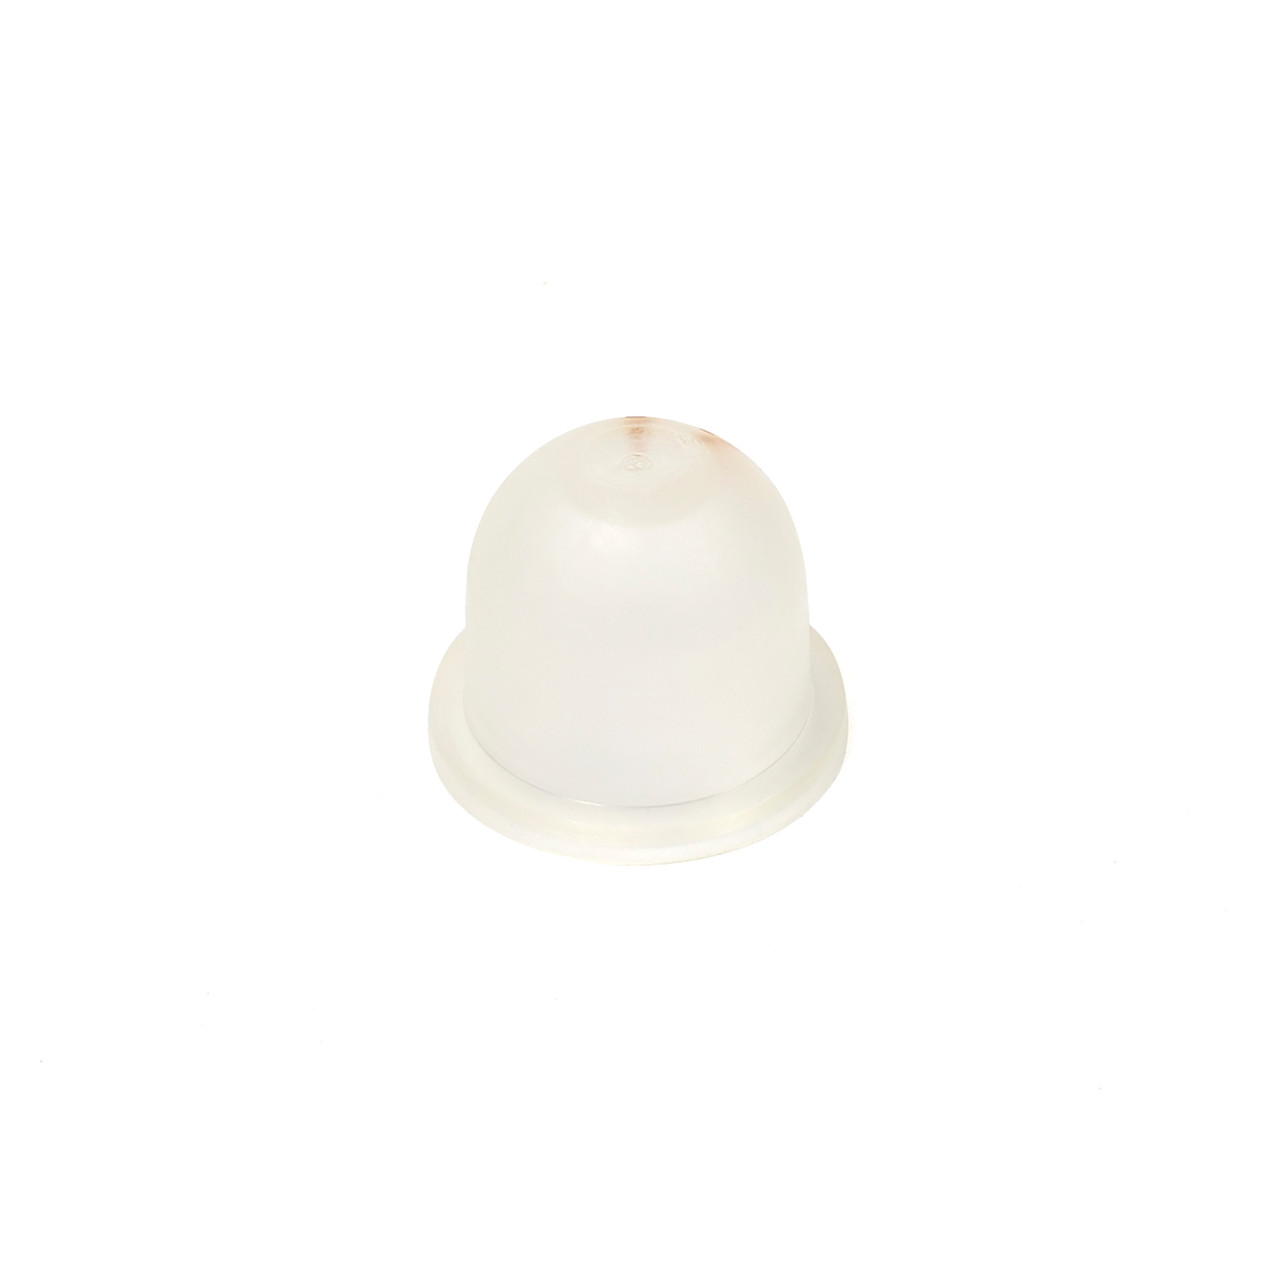 Walbro Genuine 188-17-1 Primer bulb Replacement Part